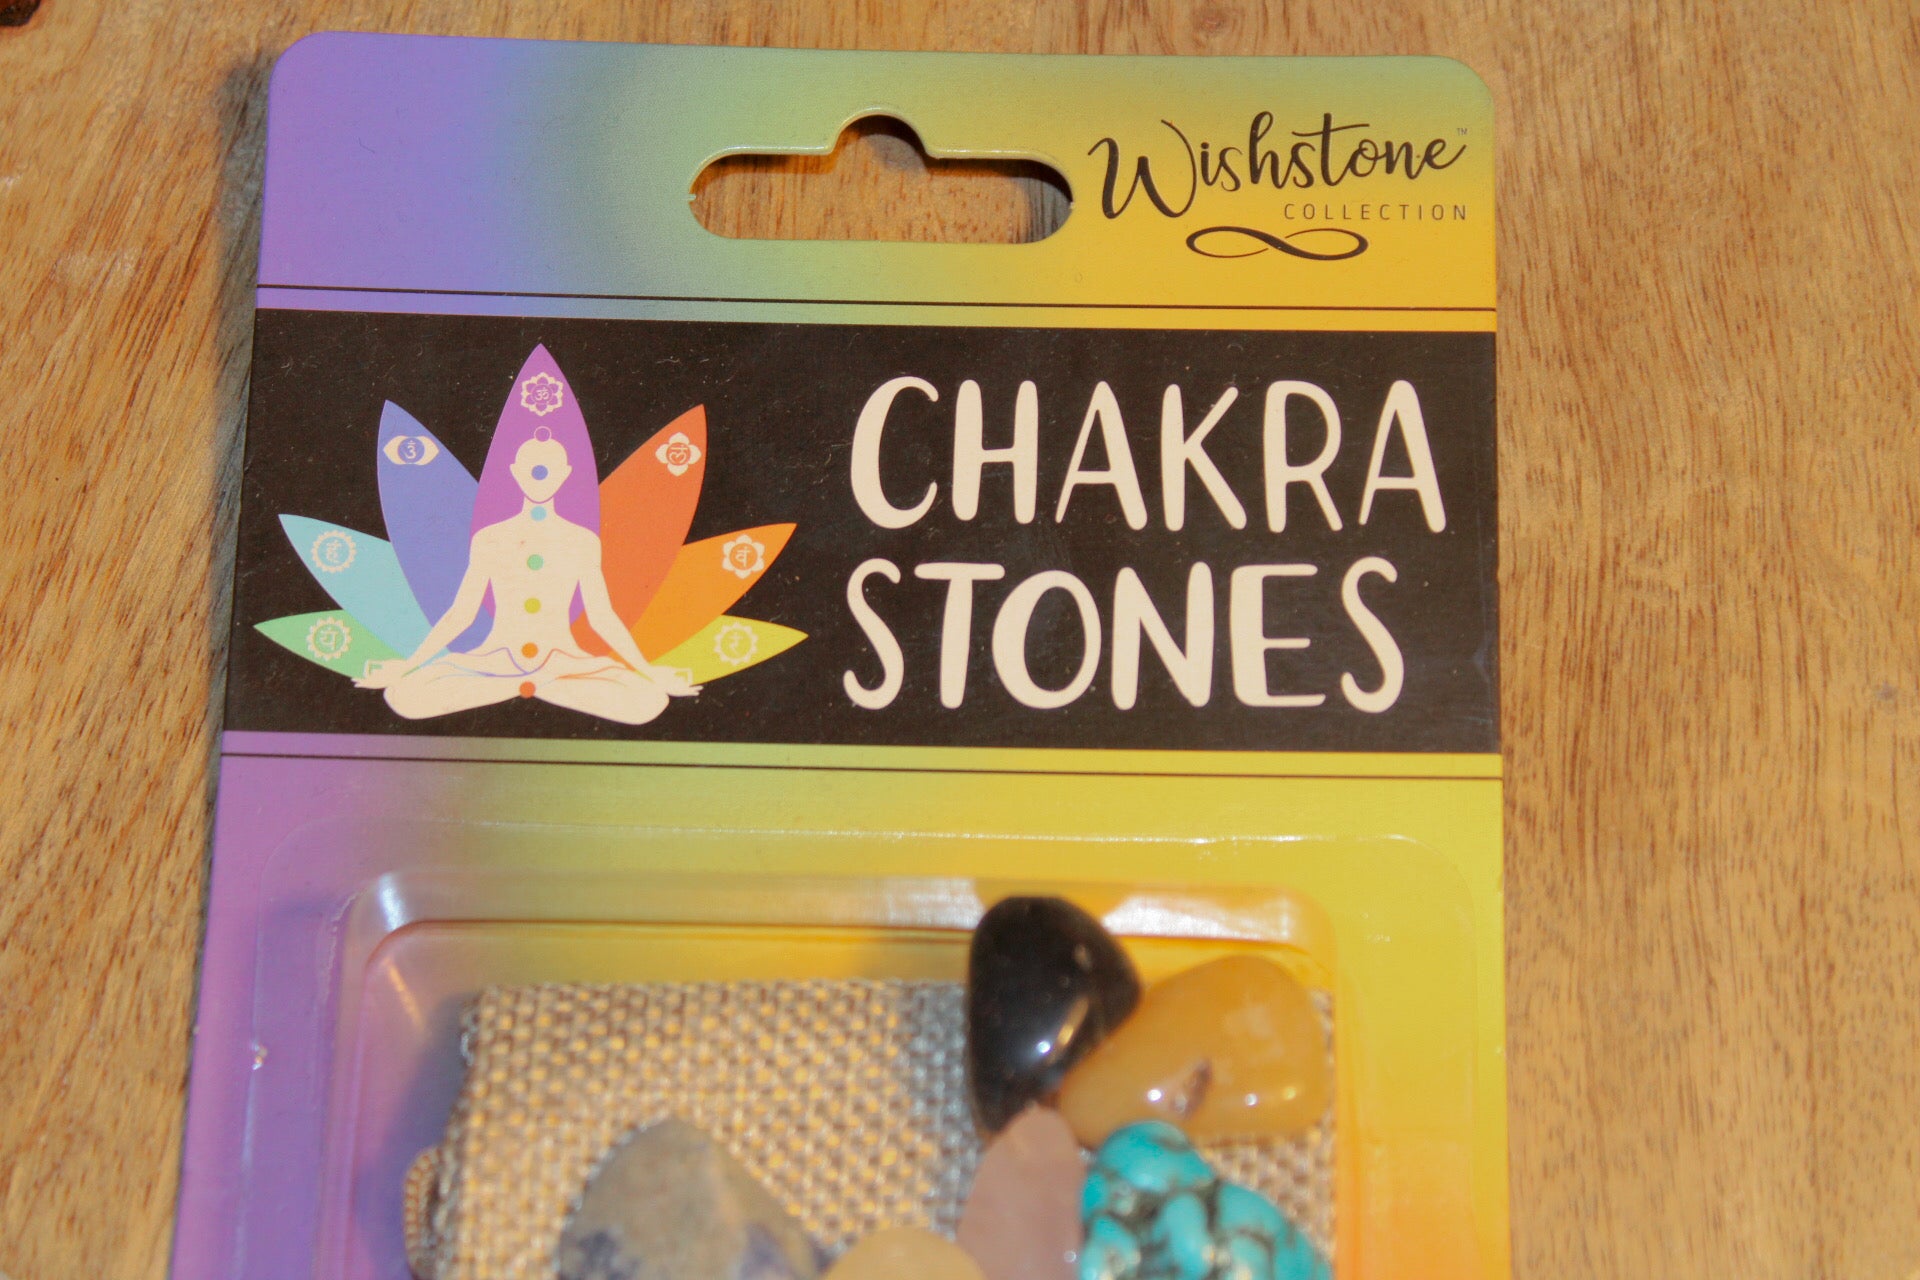 Chakra Stones Set